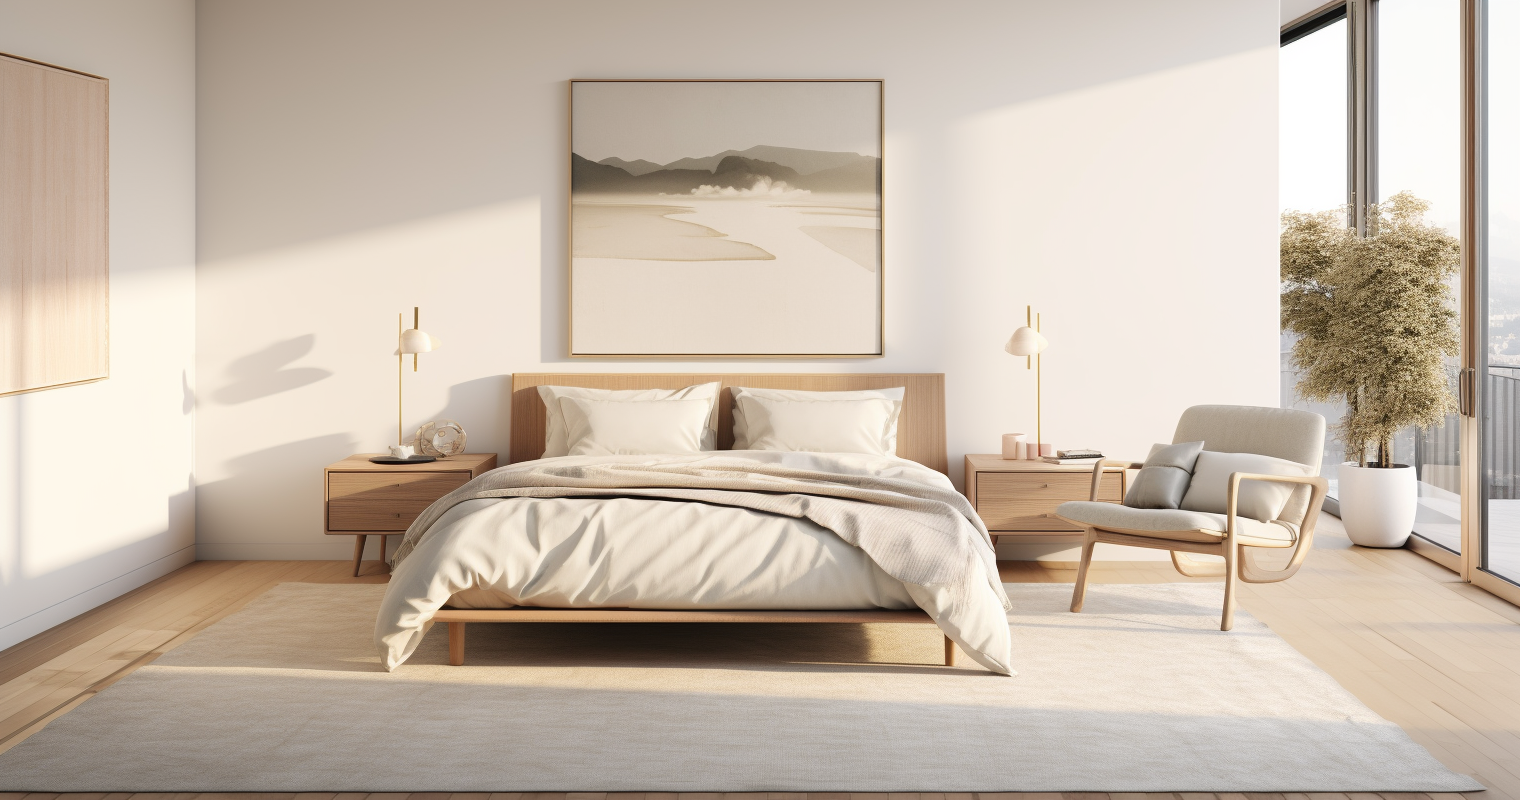 Bedroom Proportion for Optimal Comfort